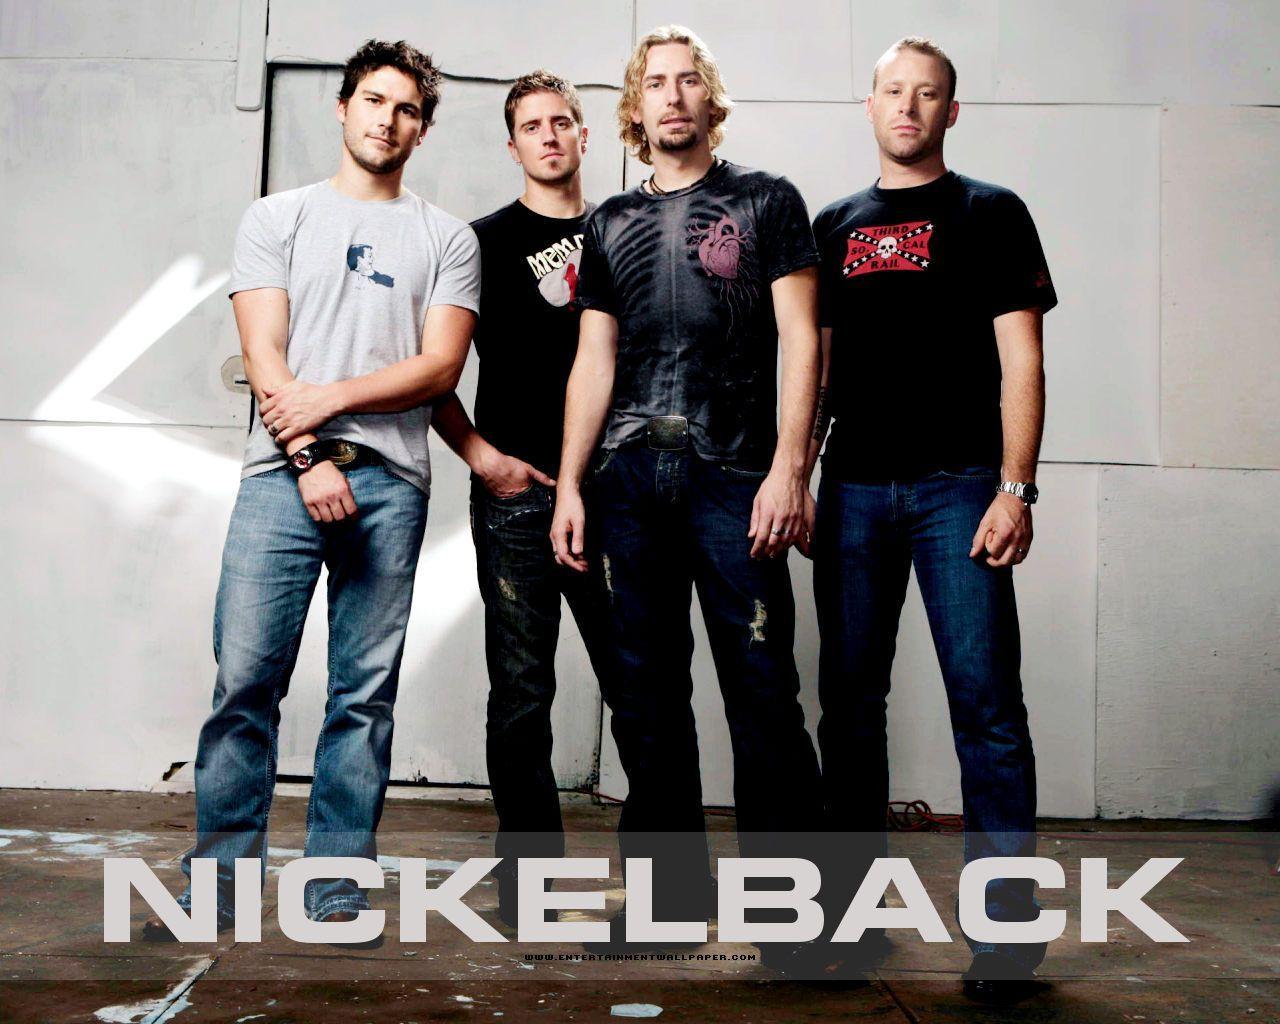 nickelback! Favorite band